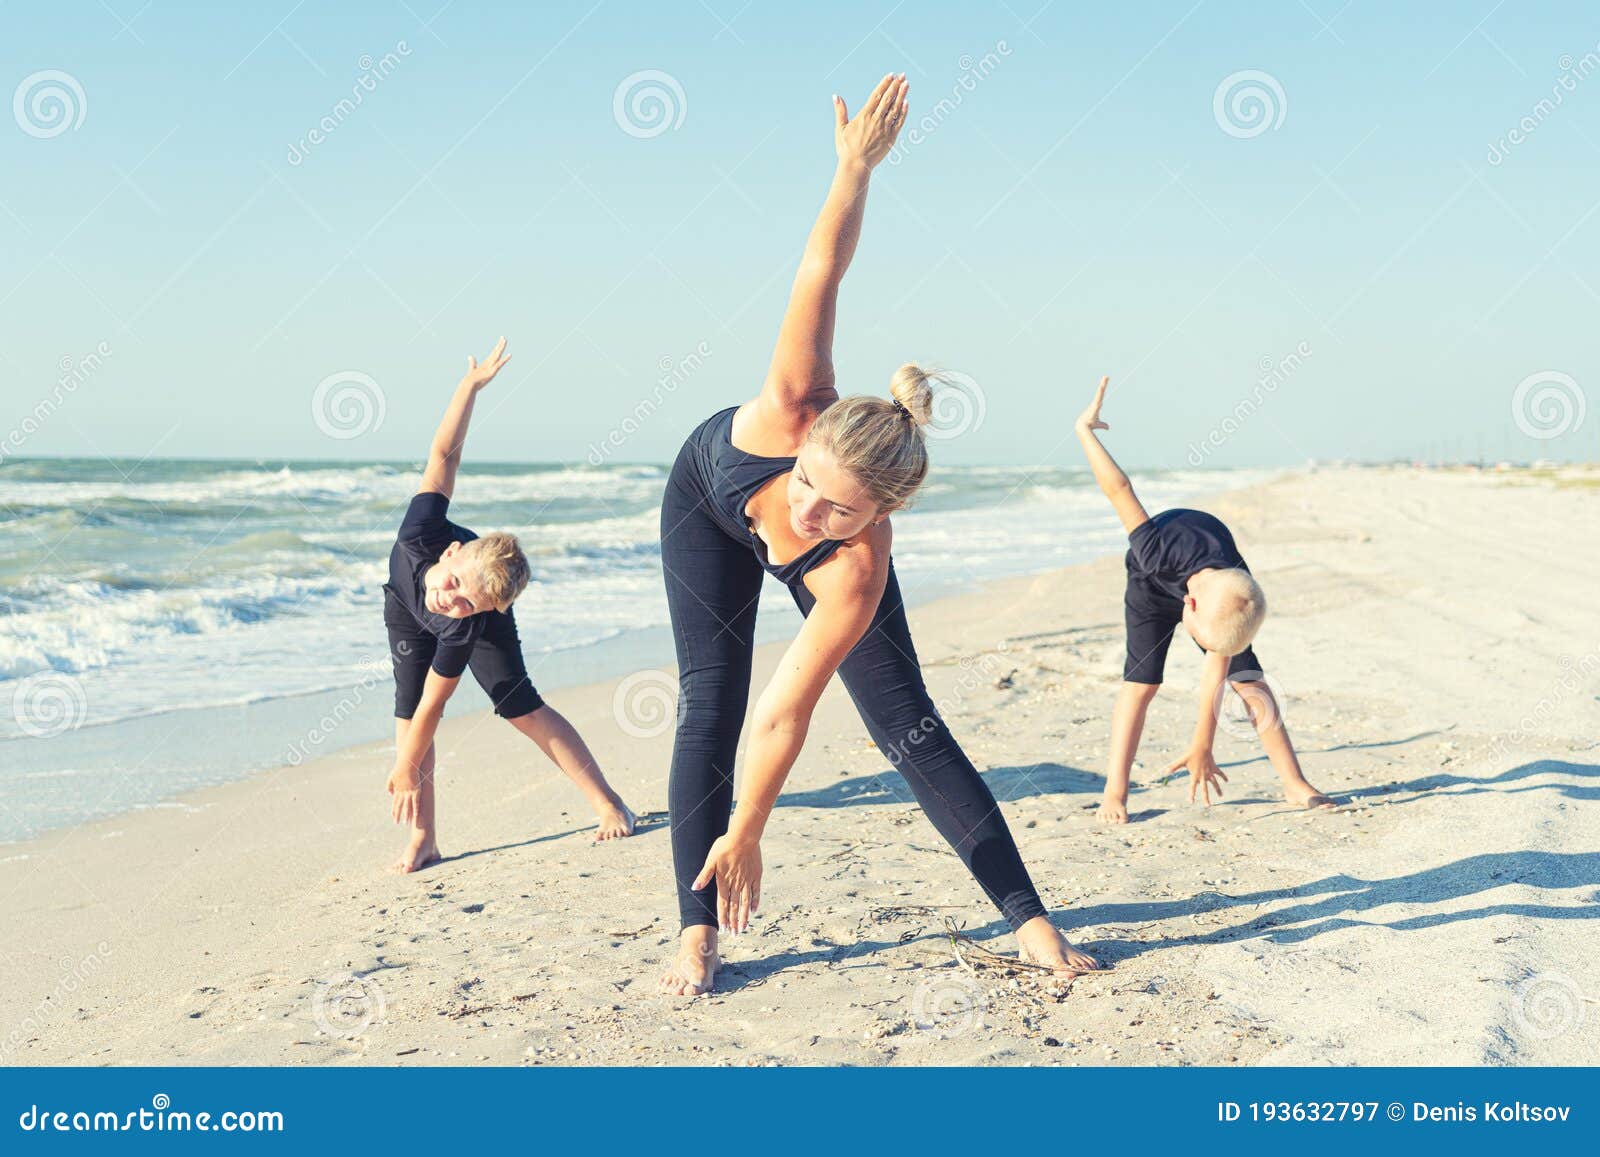 https://thumbs.dreamstime.com/z/mother-children-do-exercises-beach-meet-sunrise-fitness-sport-yoga-healthy-lifestyle-concept-193632797.jpg